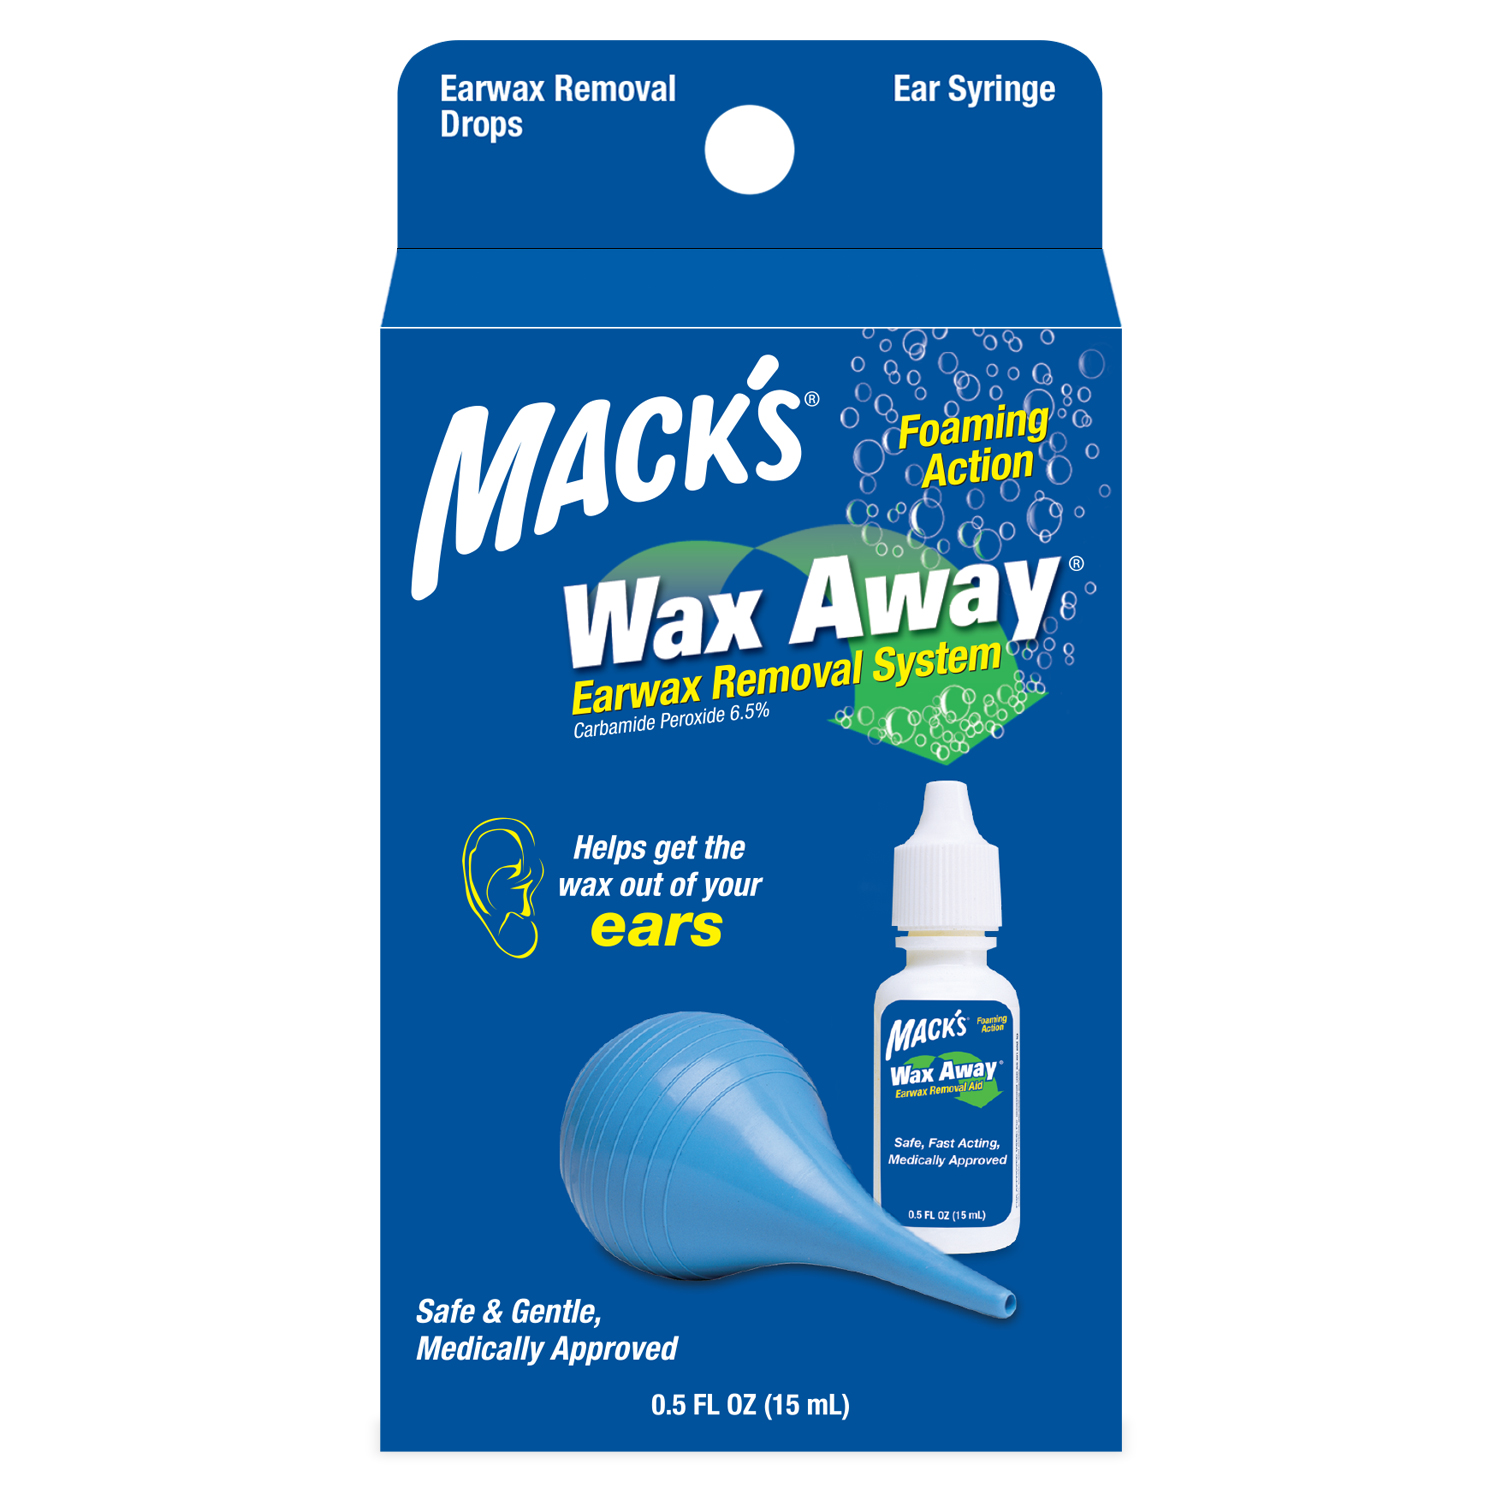 Wax Away Ear Wax Removal System